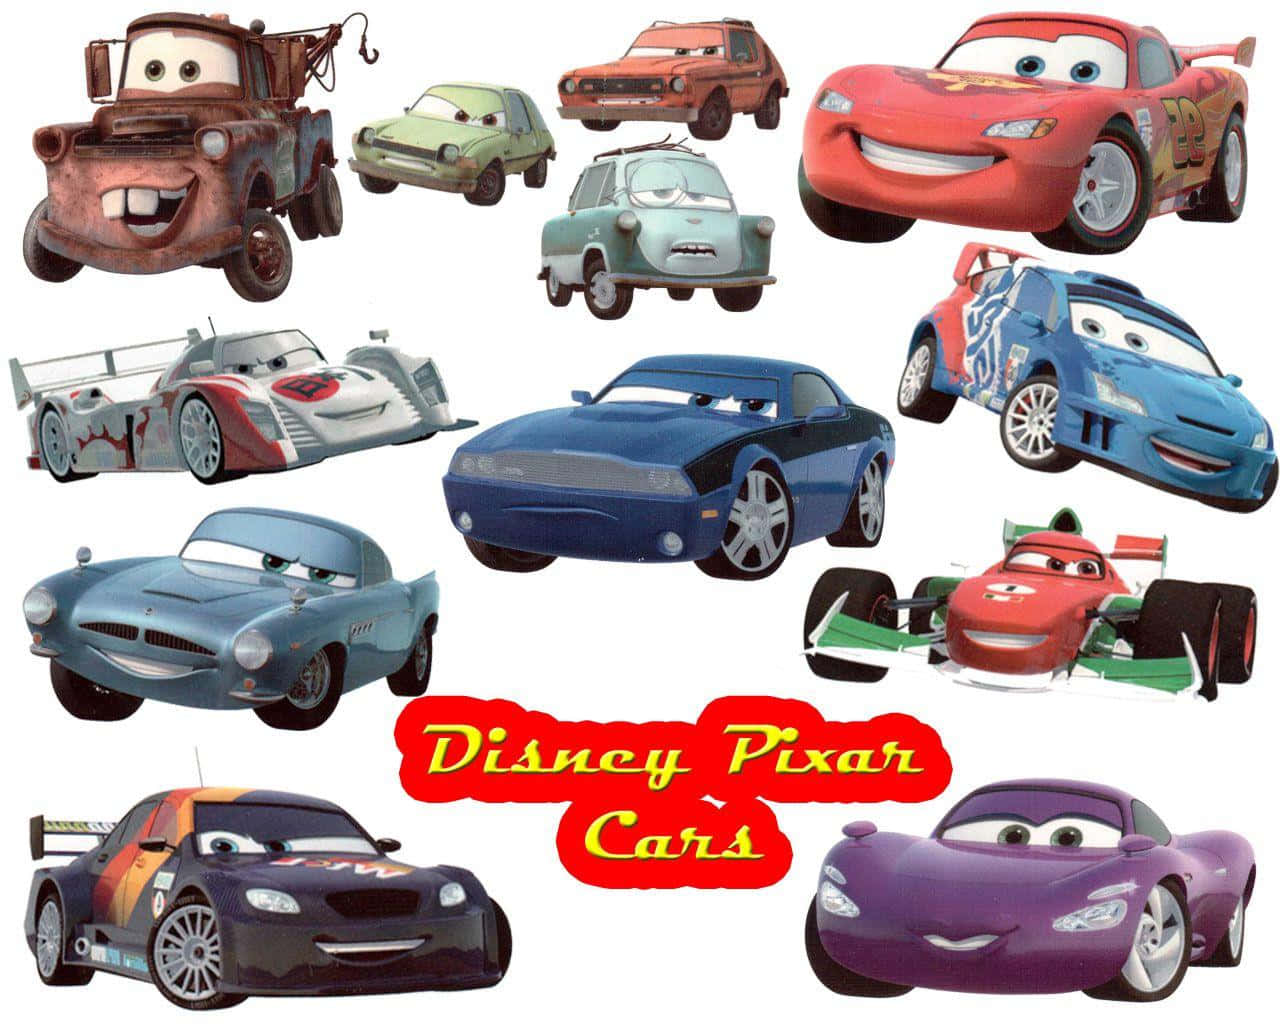 Lightning McQueen leading the race in Disney Cars